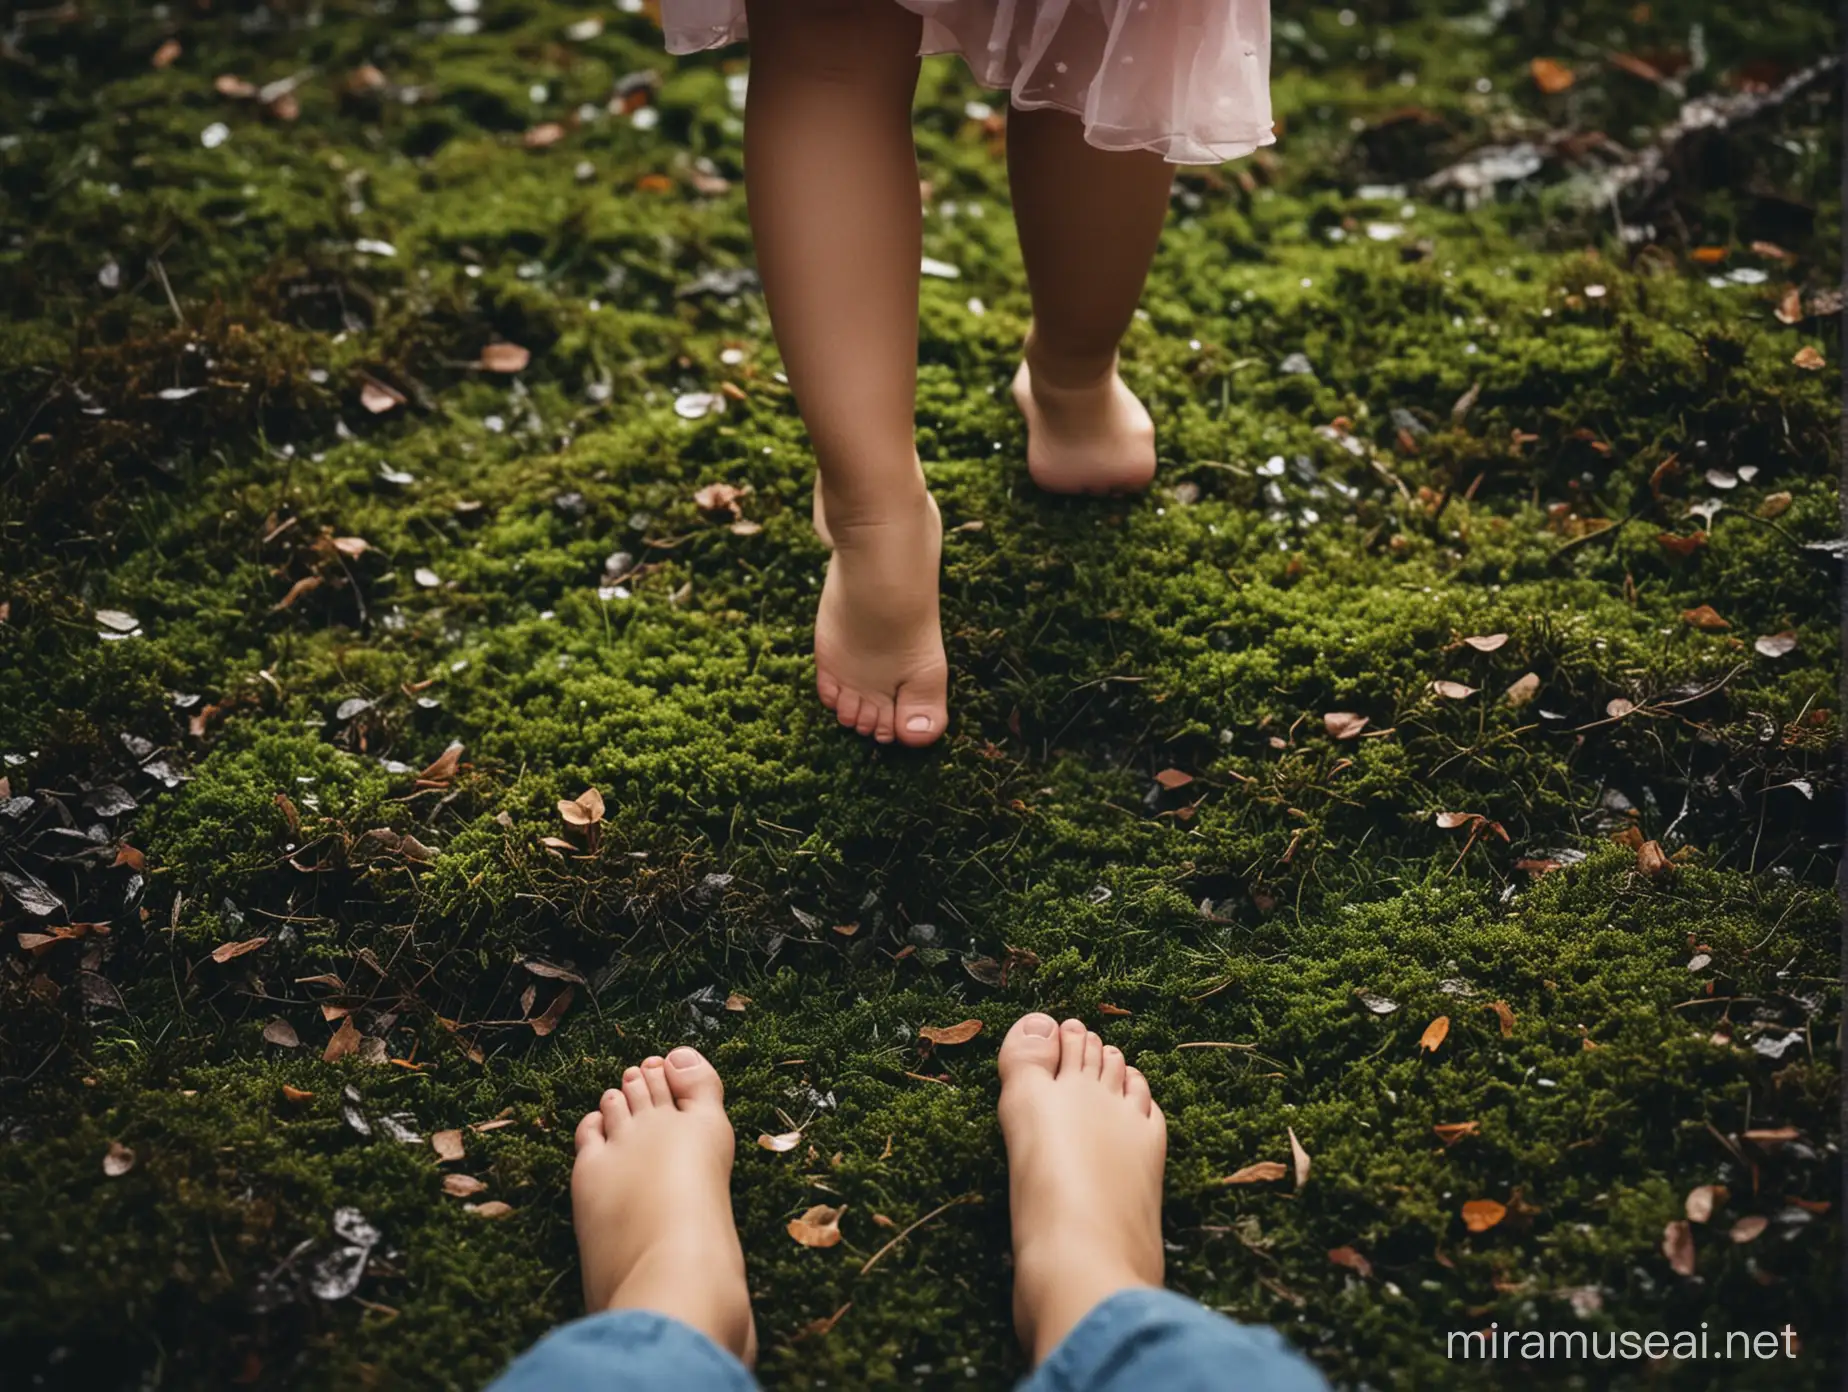 Nighttime Stroll Little Girls Bare Feet on Moss in Enchanted Forest